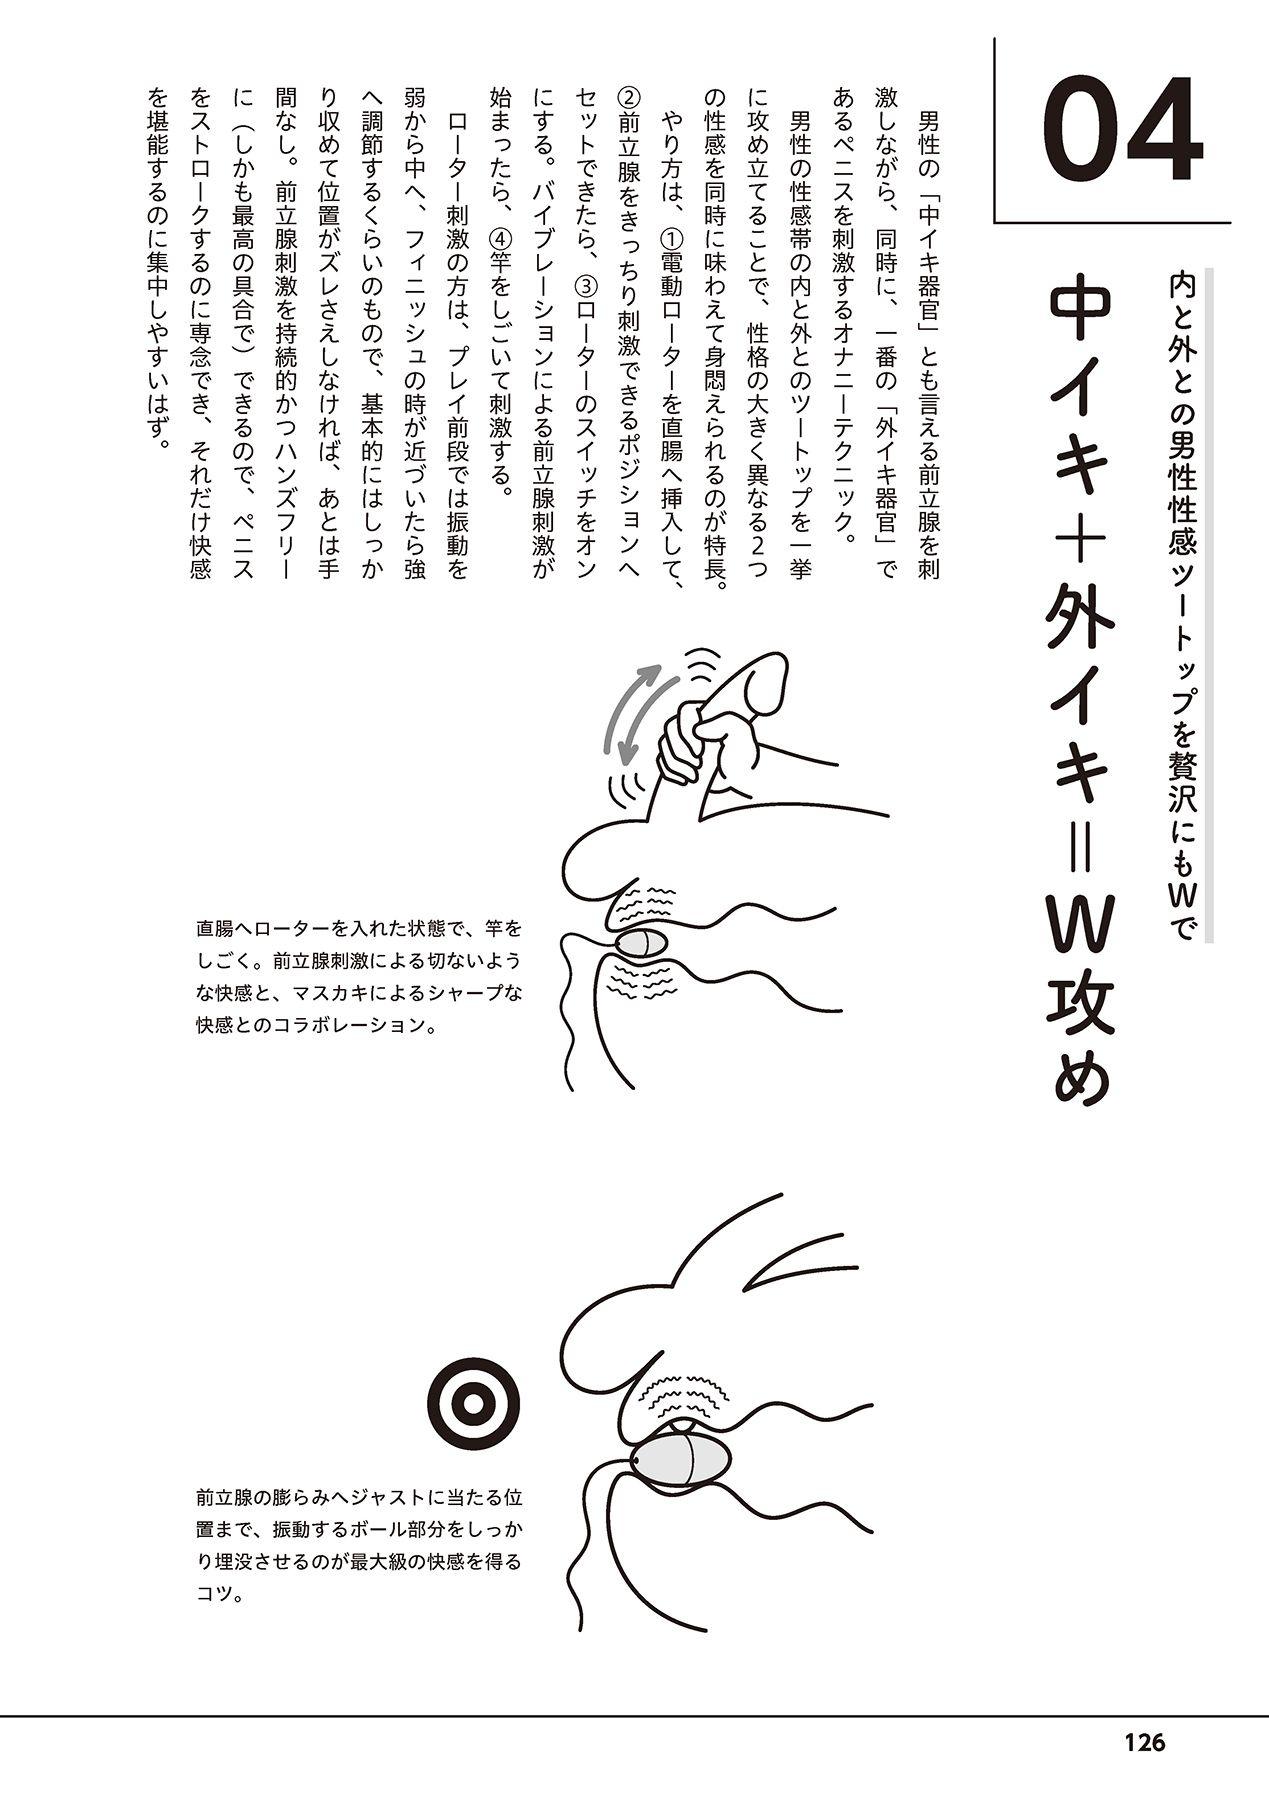 Otoko no Jii Onanie Kanzen Manual Illustration Han...... Onanie Play 127